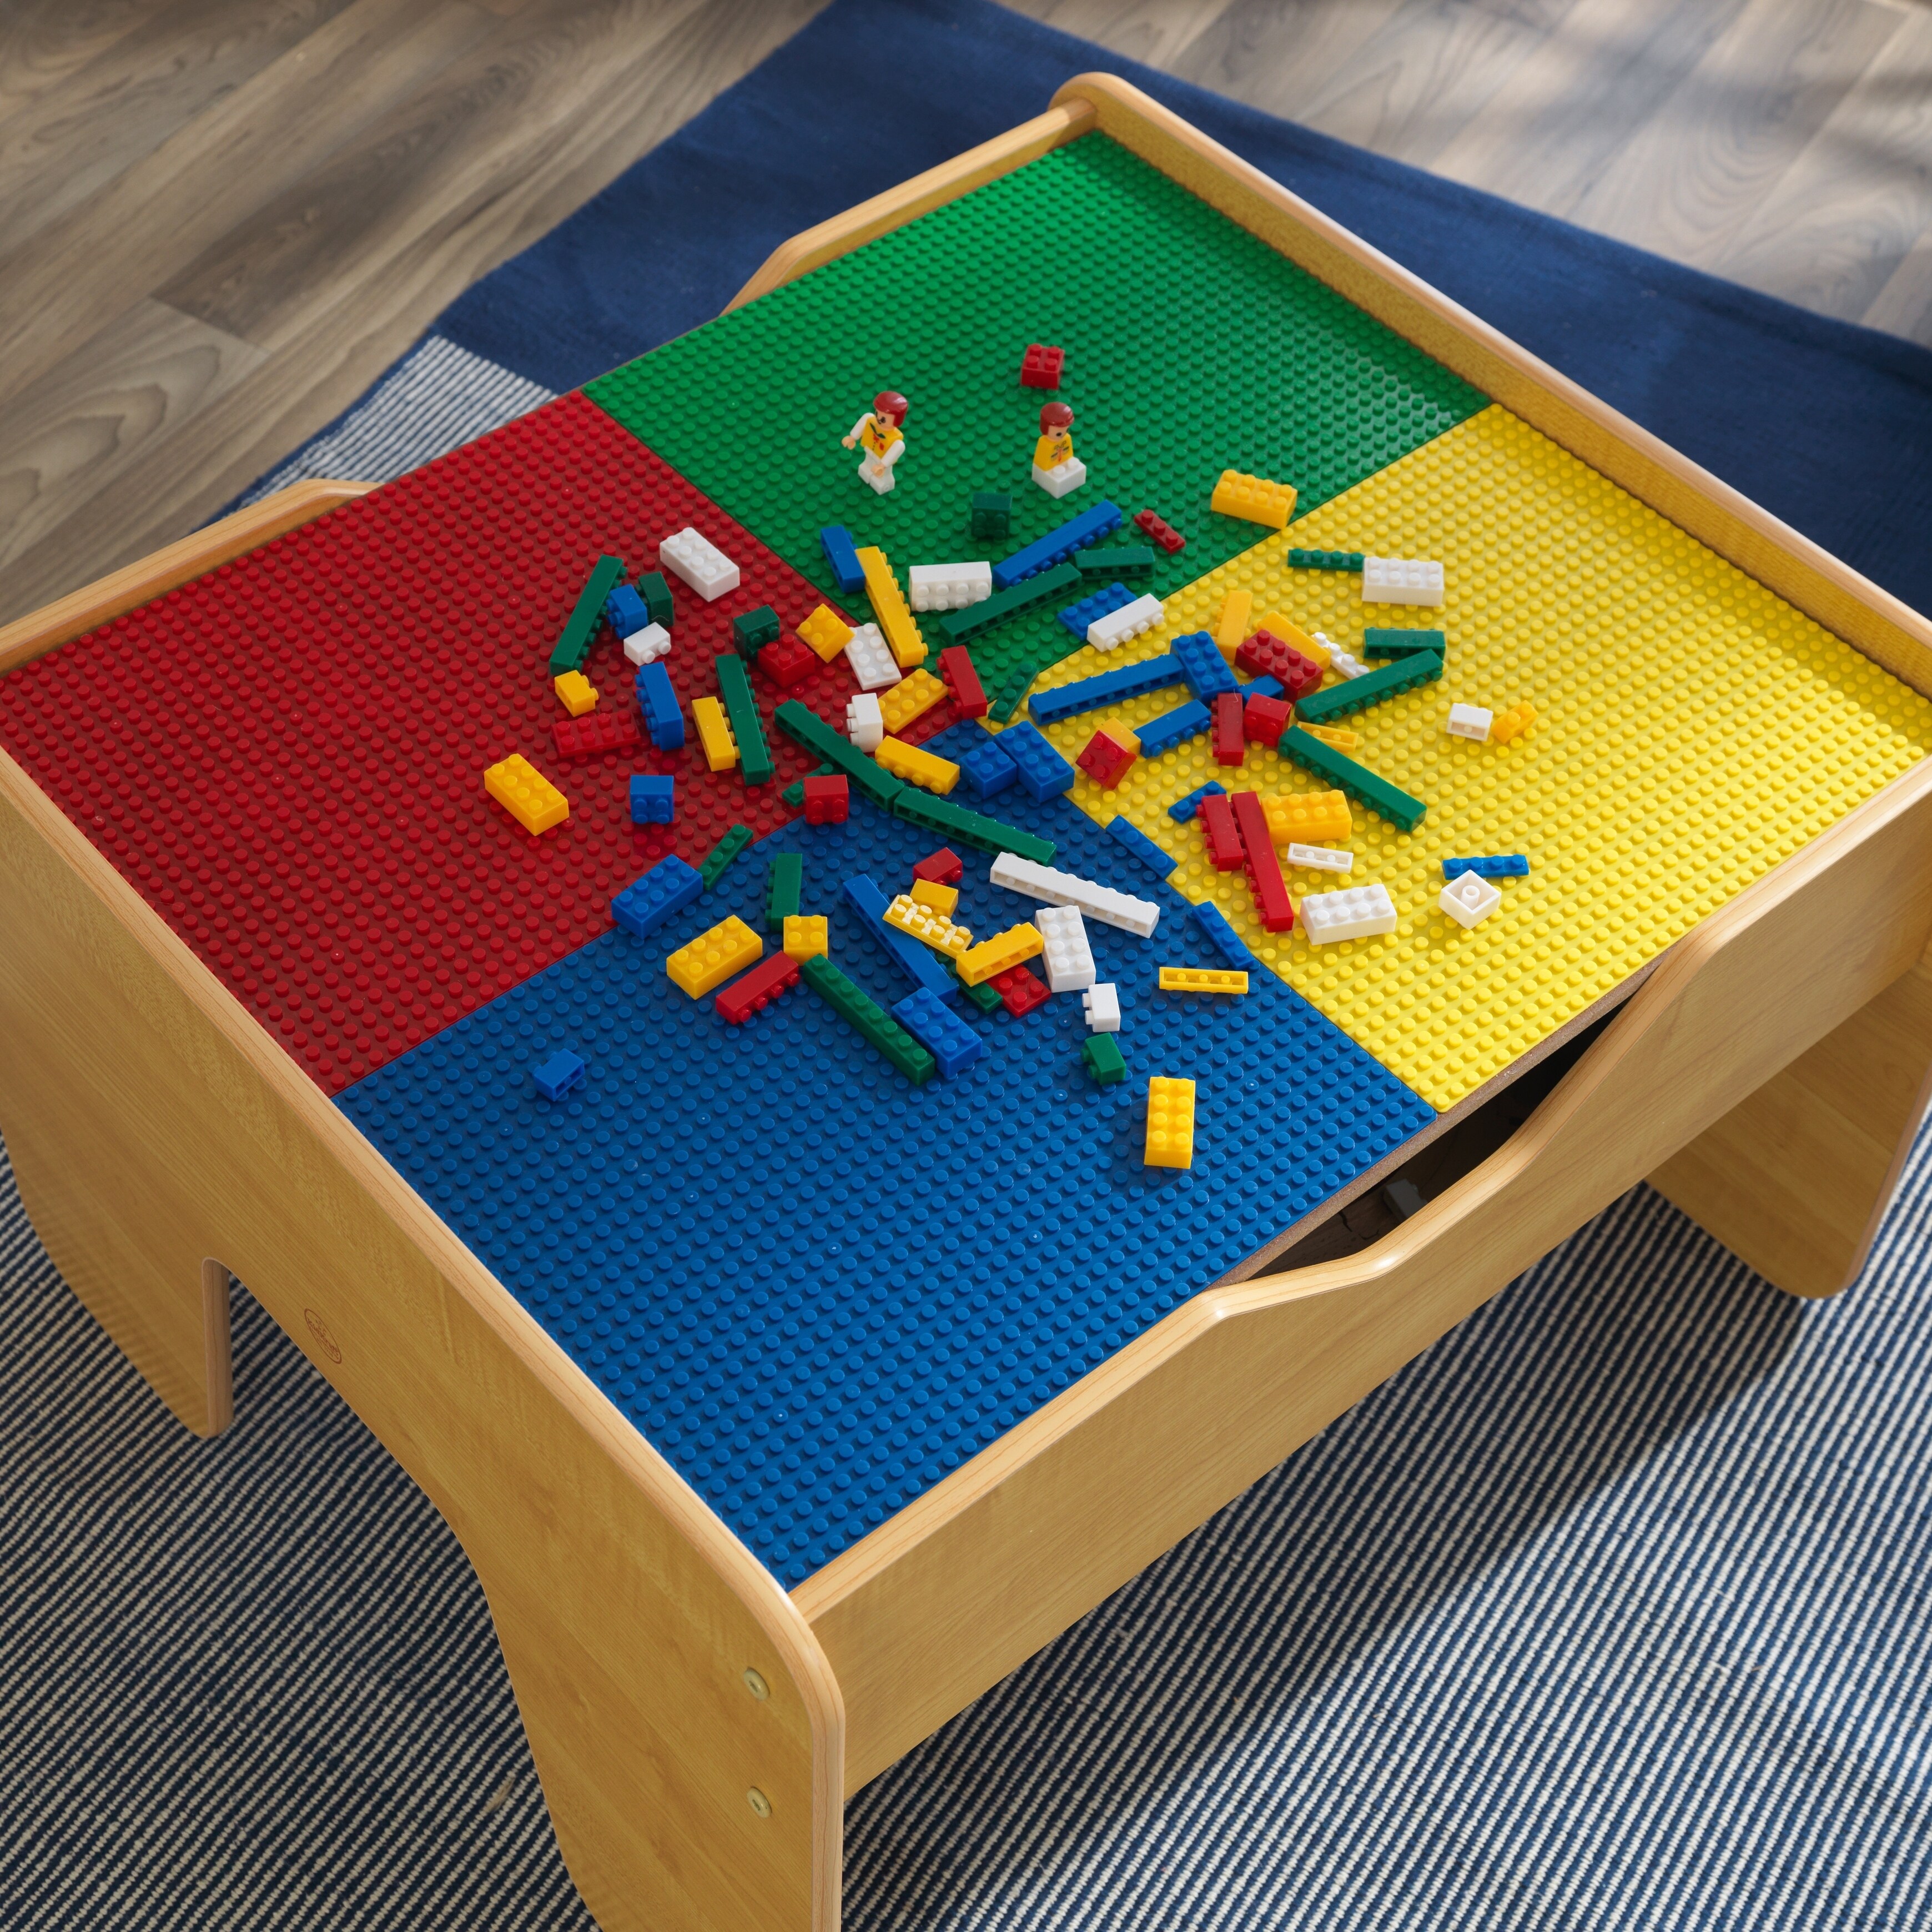 kidkraft lego train table